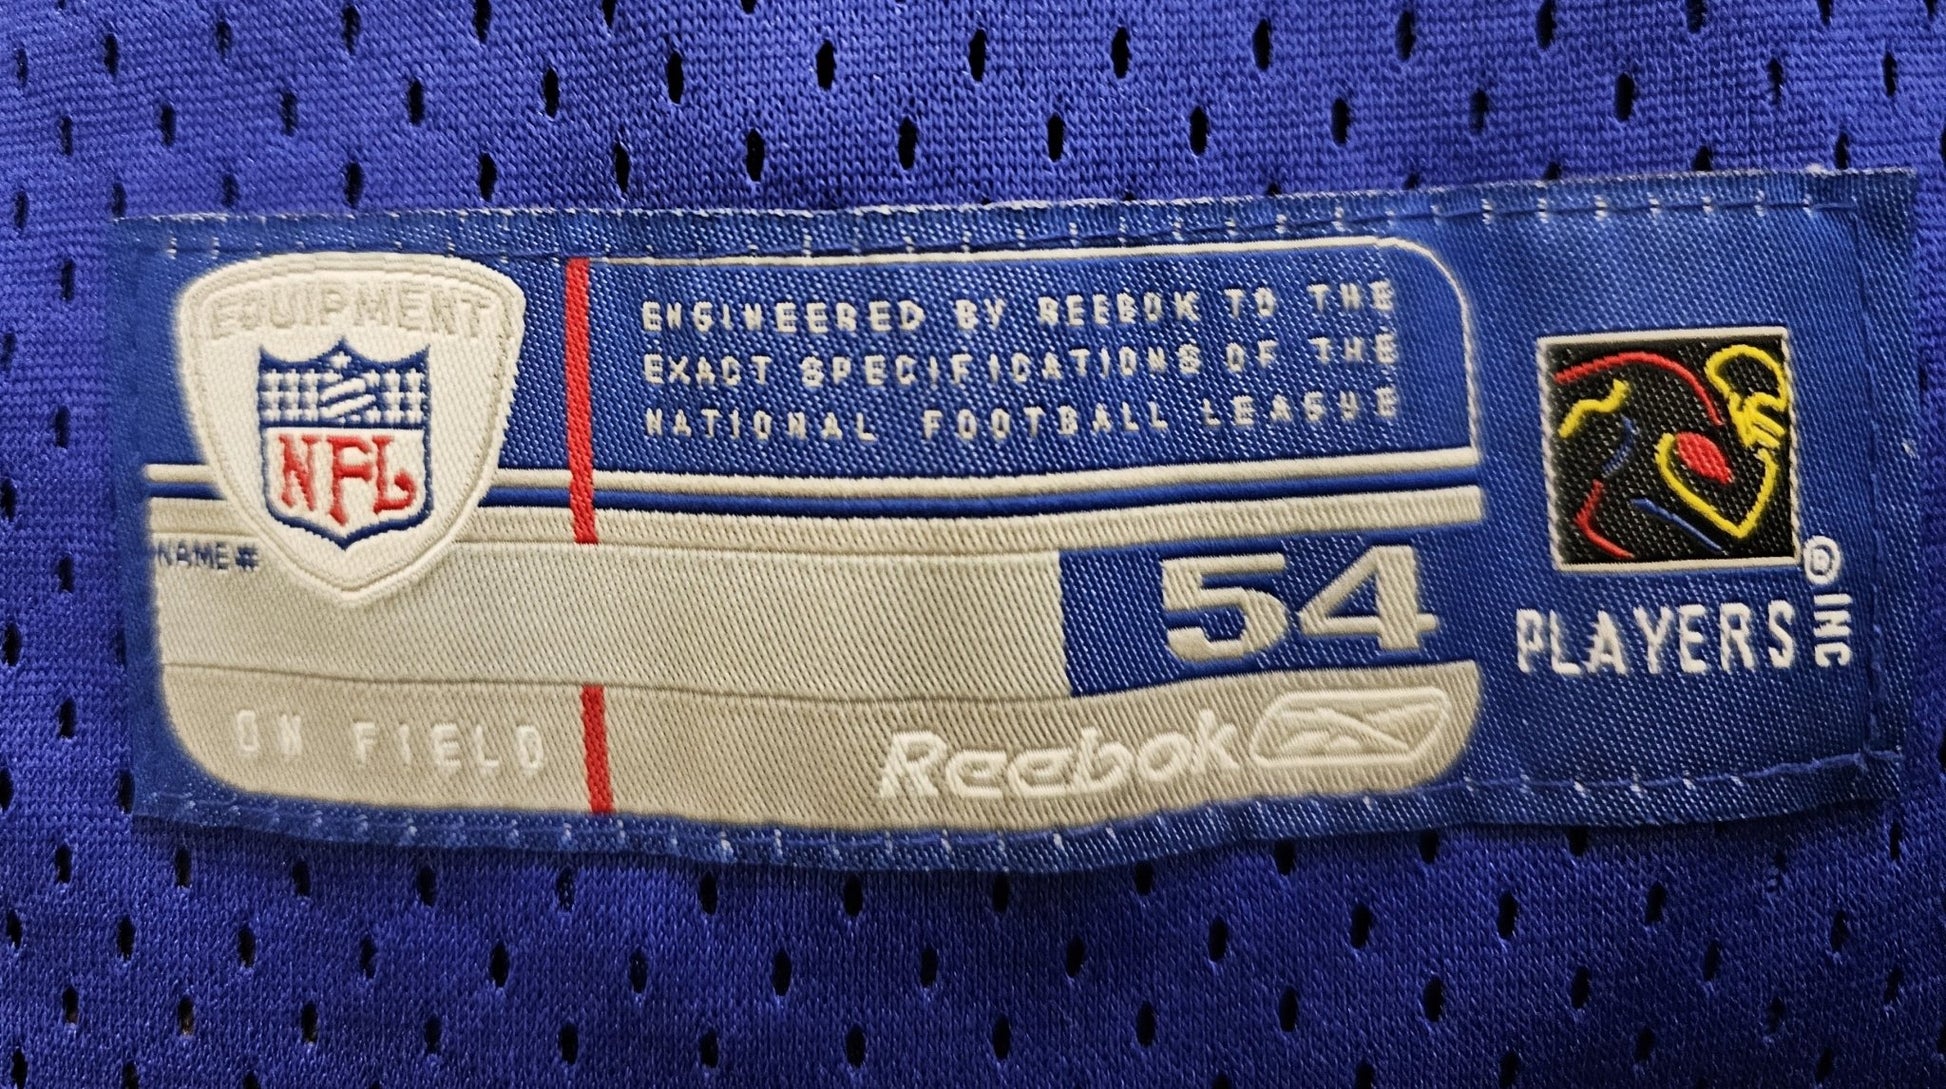 Reebok - NFL | Men's Reebok NFL Equipment Bob Sanders Indianapolis Colts Sewn Authentic Jersey | sz 54 - NFL Jersey - Steady Bunny Shop